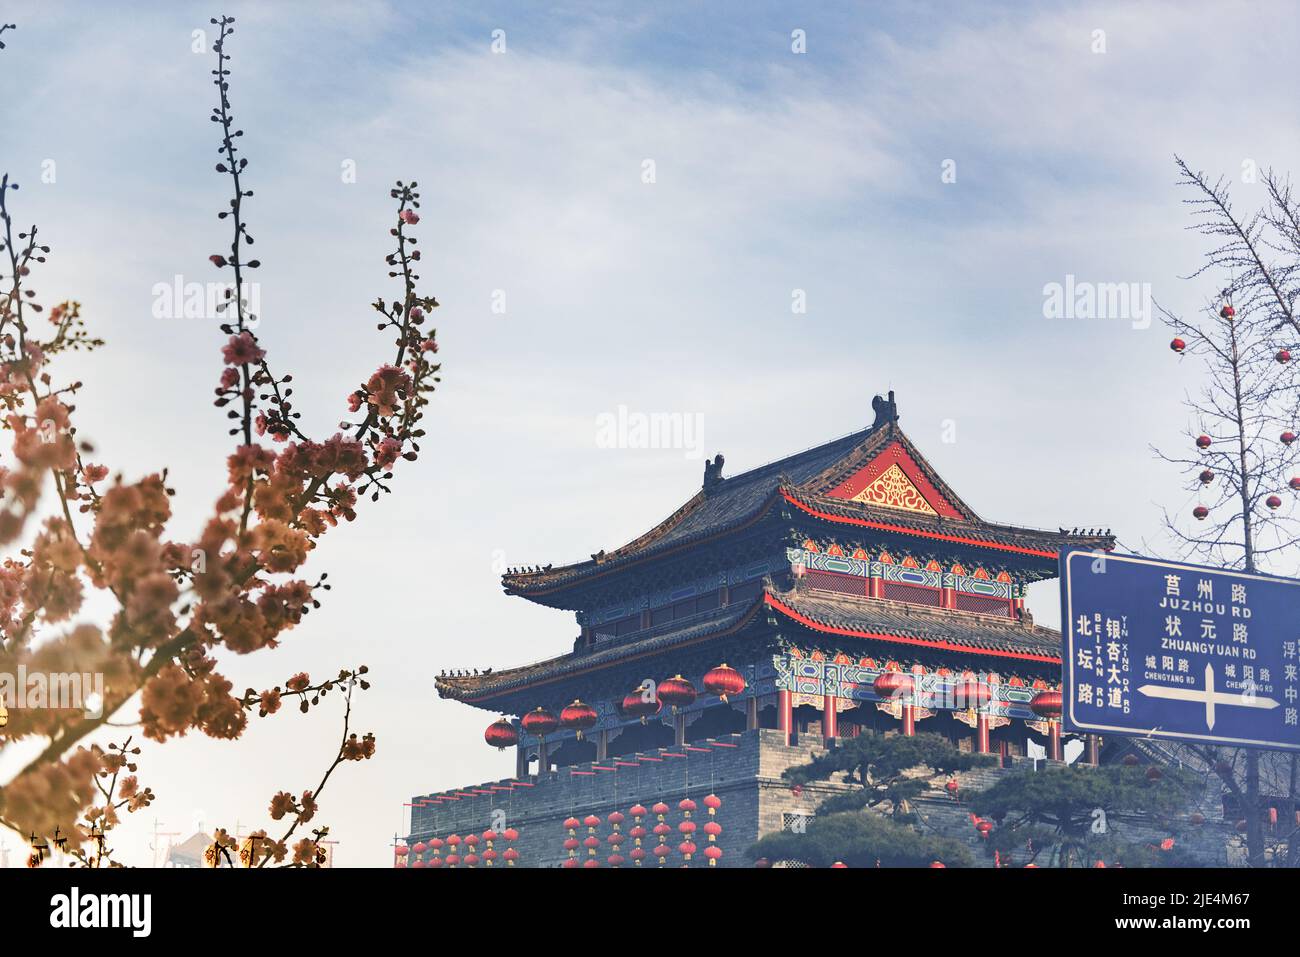 Shandong Scenery j ju City der malerische Ort Reise Fotografie Stockfoto